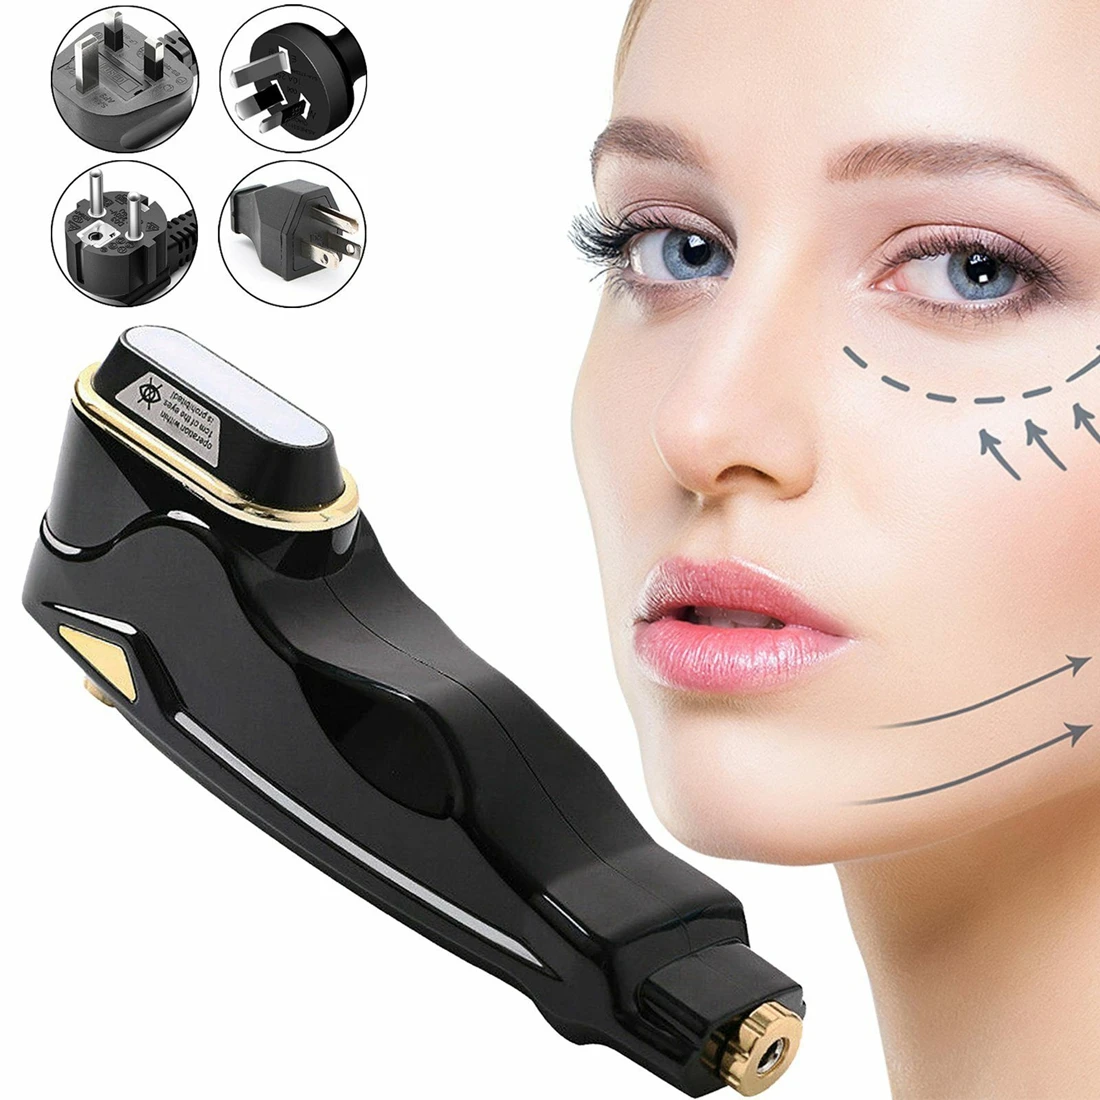 

Skin Care SPA Salon Home Use CE Professional Mini HIFU Facial Rejuvenation Anti Aging/Wrinkle Beauty Machine Ultrasonic